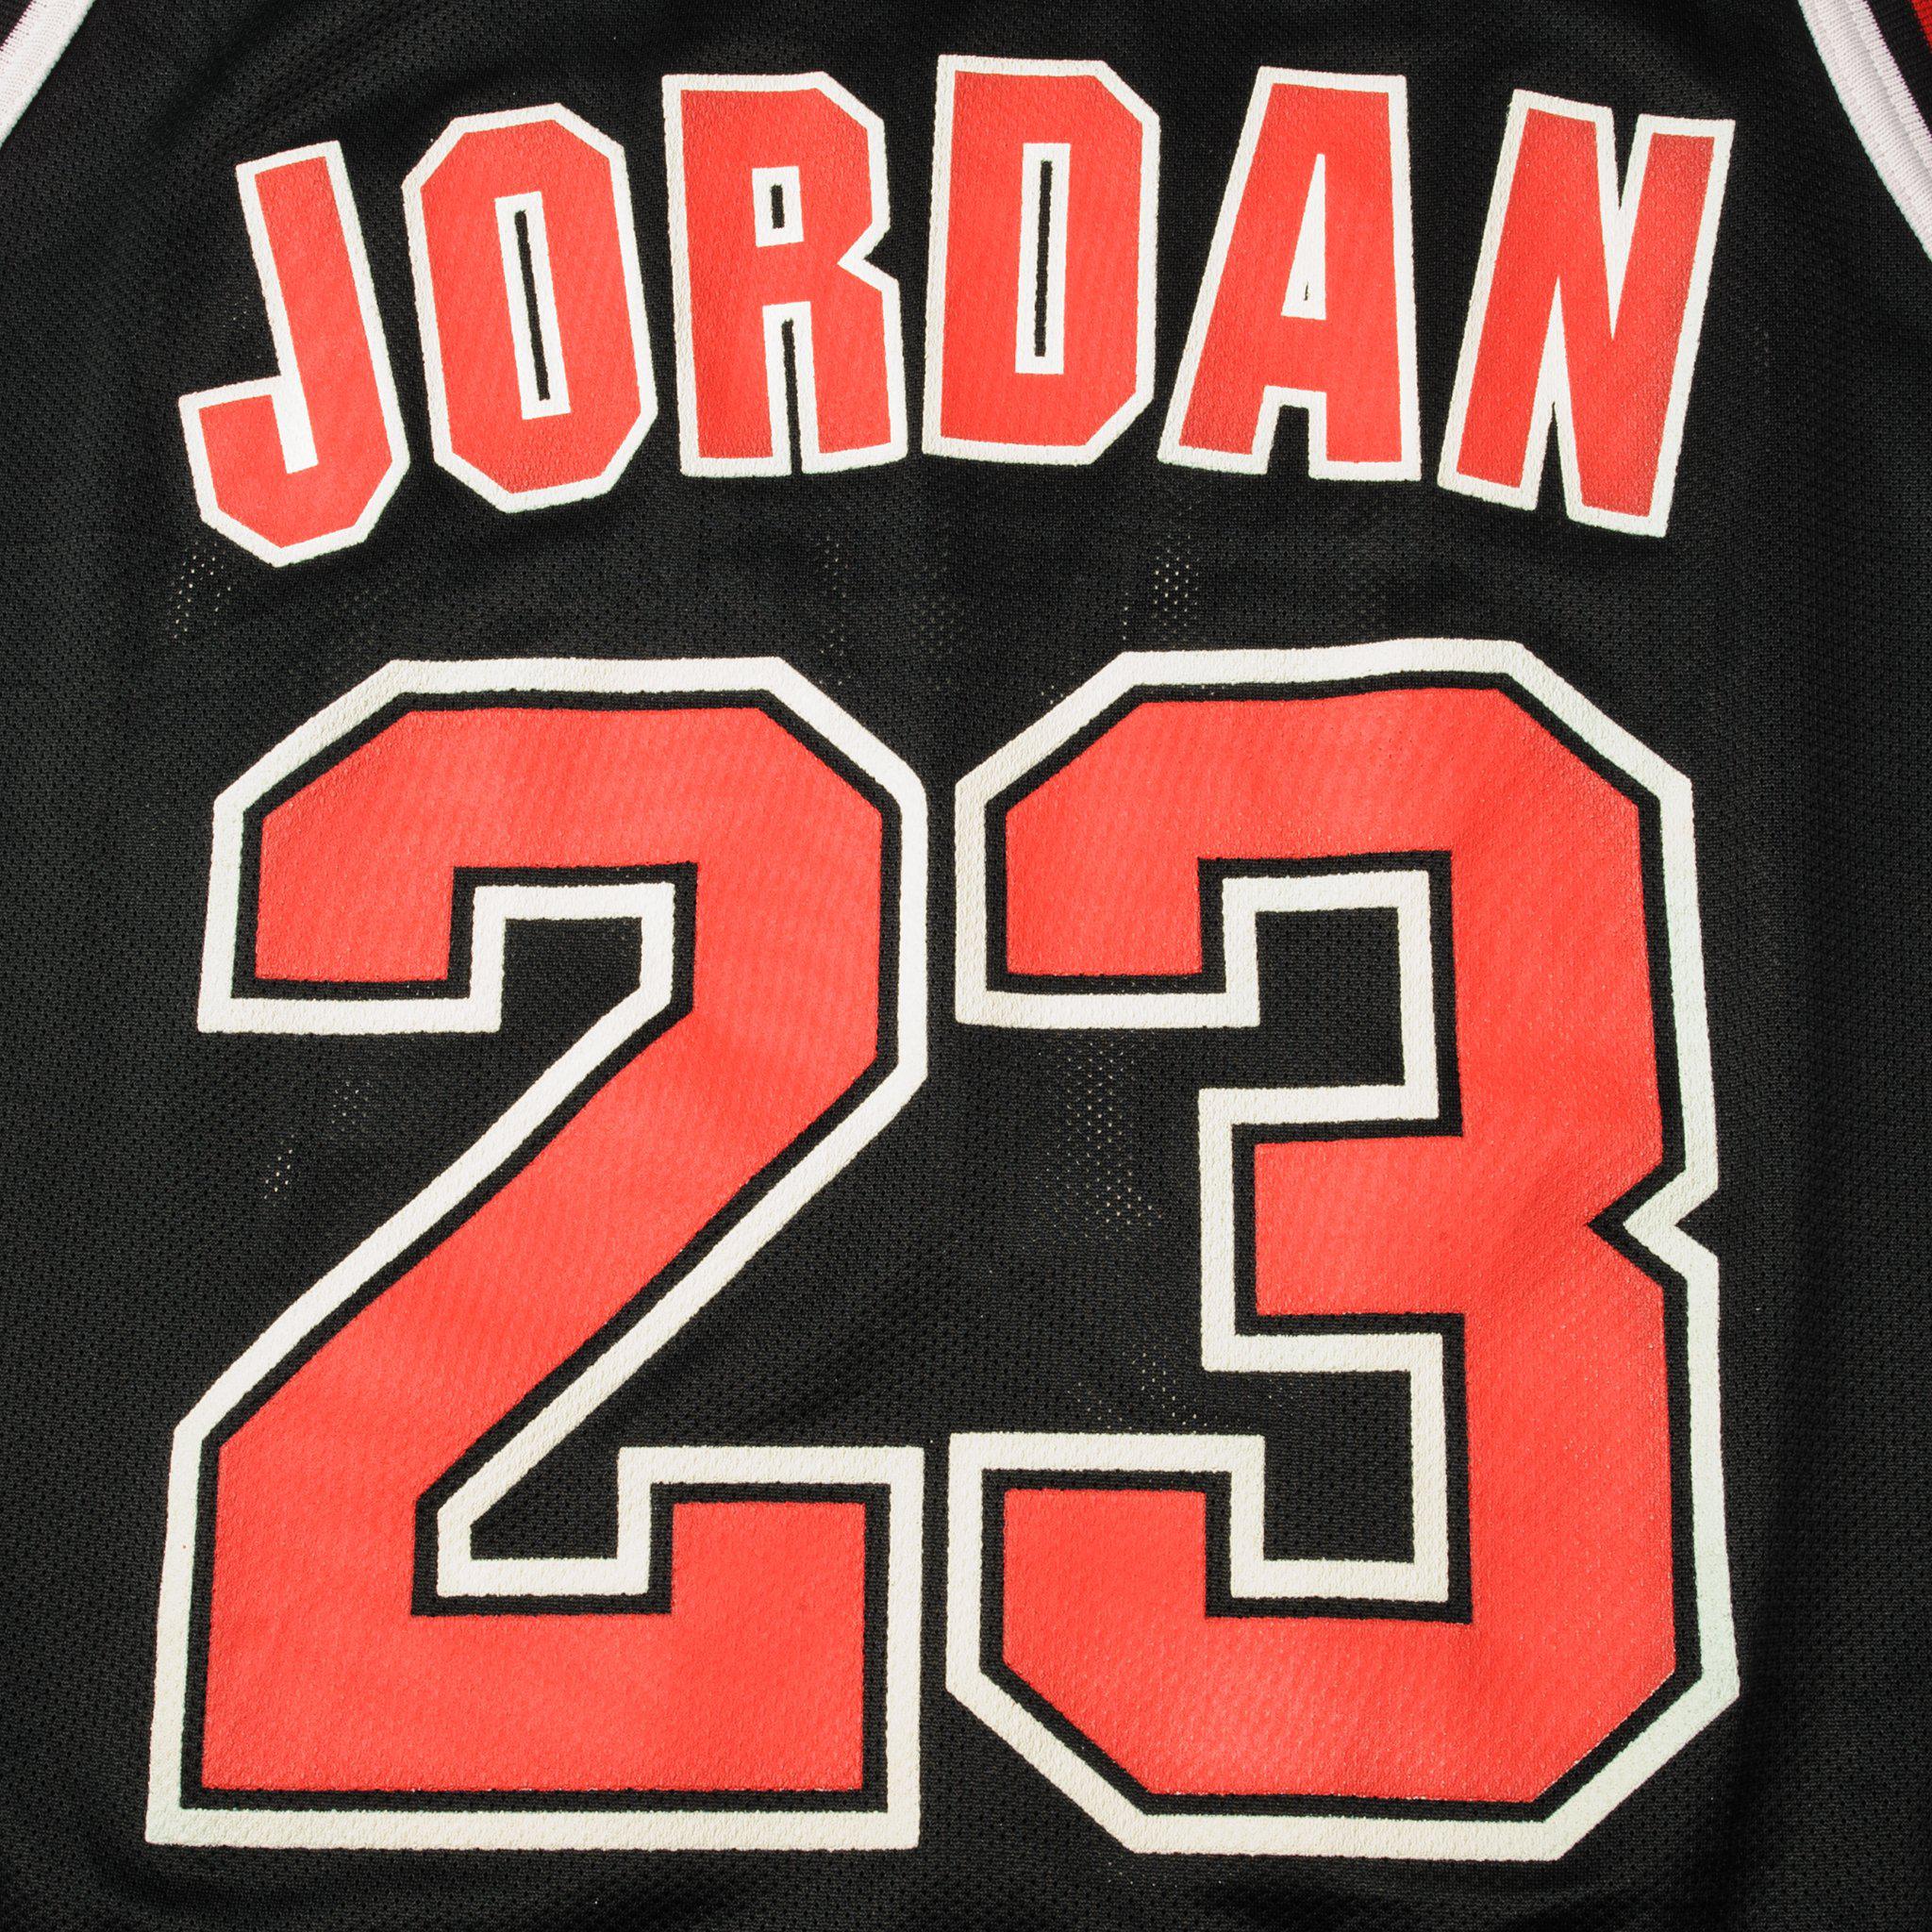 Vintage 1990's CHAMPION Chicago Bulls Michael Jordan #23 Jersey Sz. S